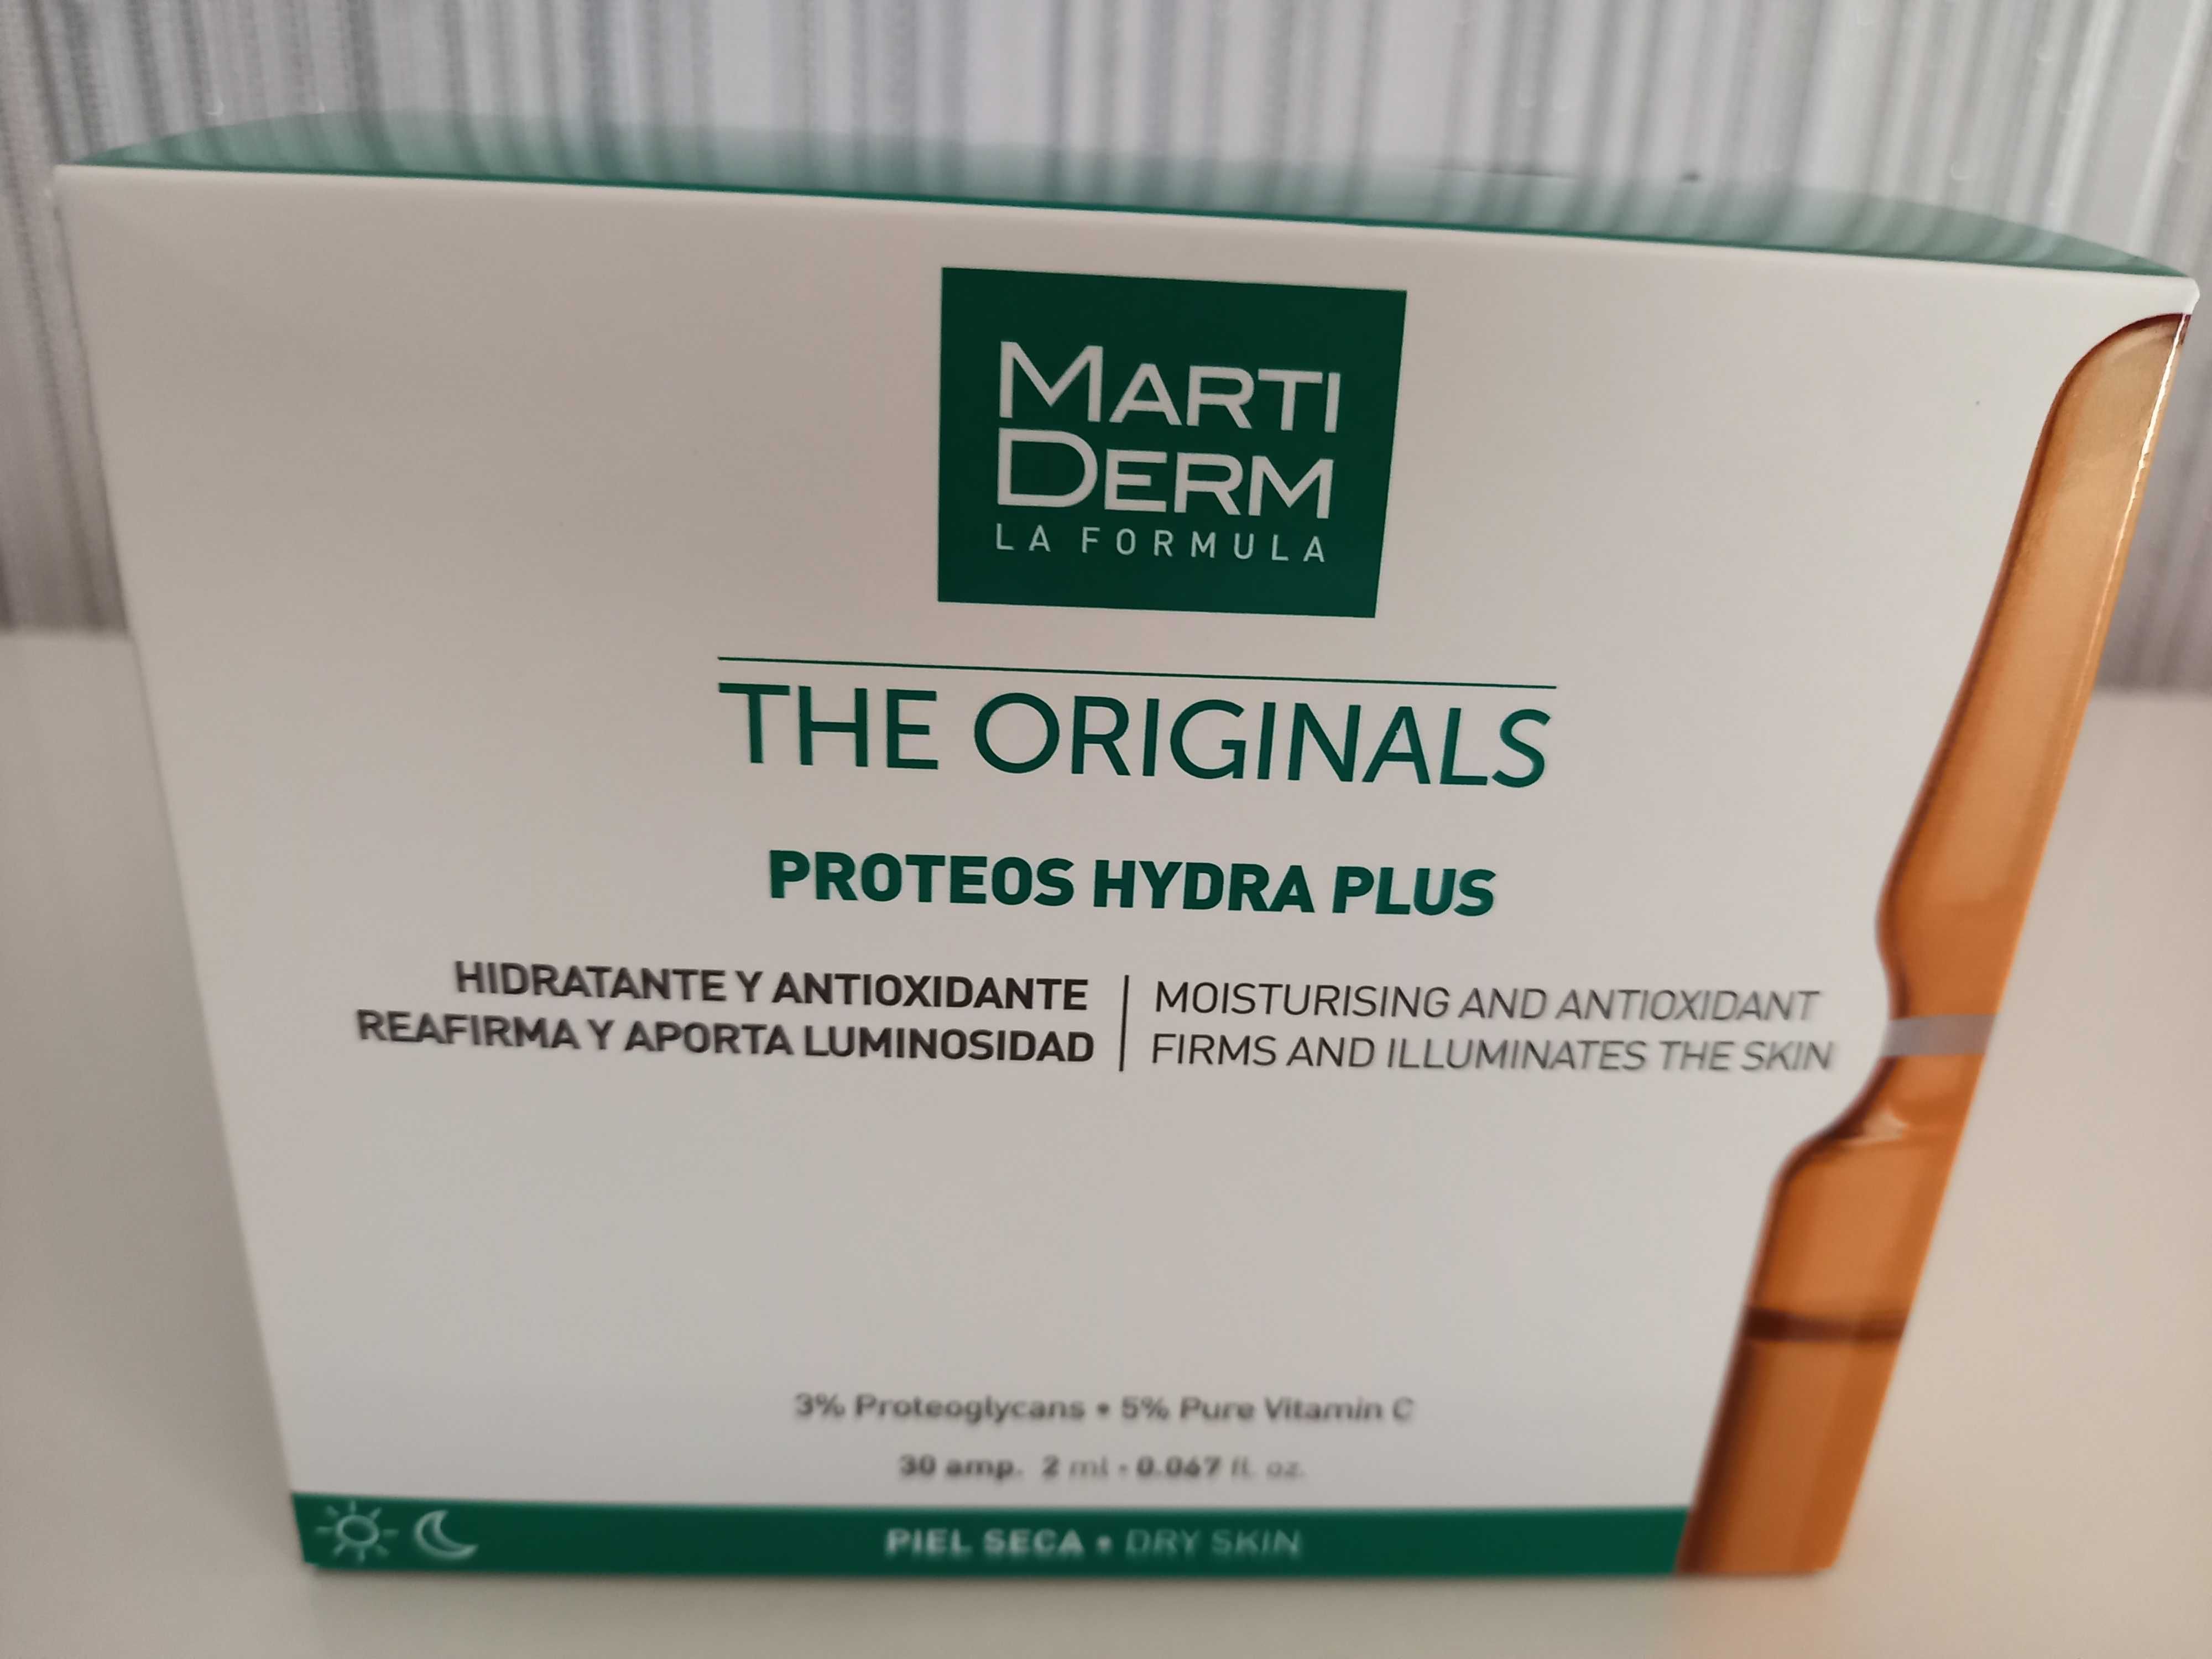 Martiderm proteos hydra plus ампулы для сухой и обезвоженной кожи.